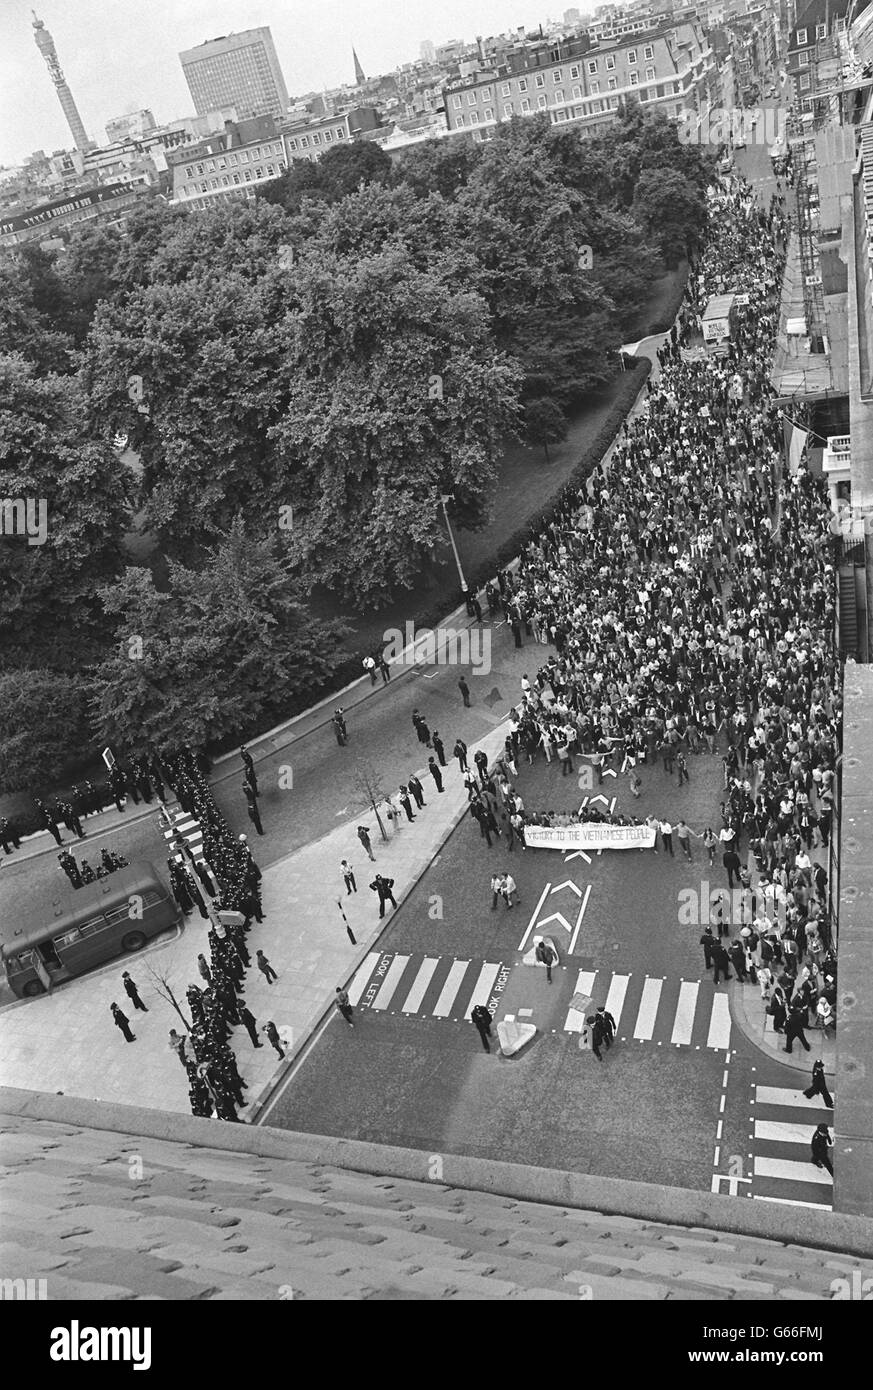 The demonstration against th Vietnam War in Grosvenor Square. Stock Photo